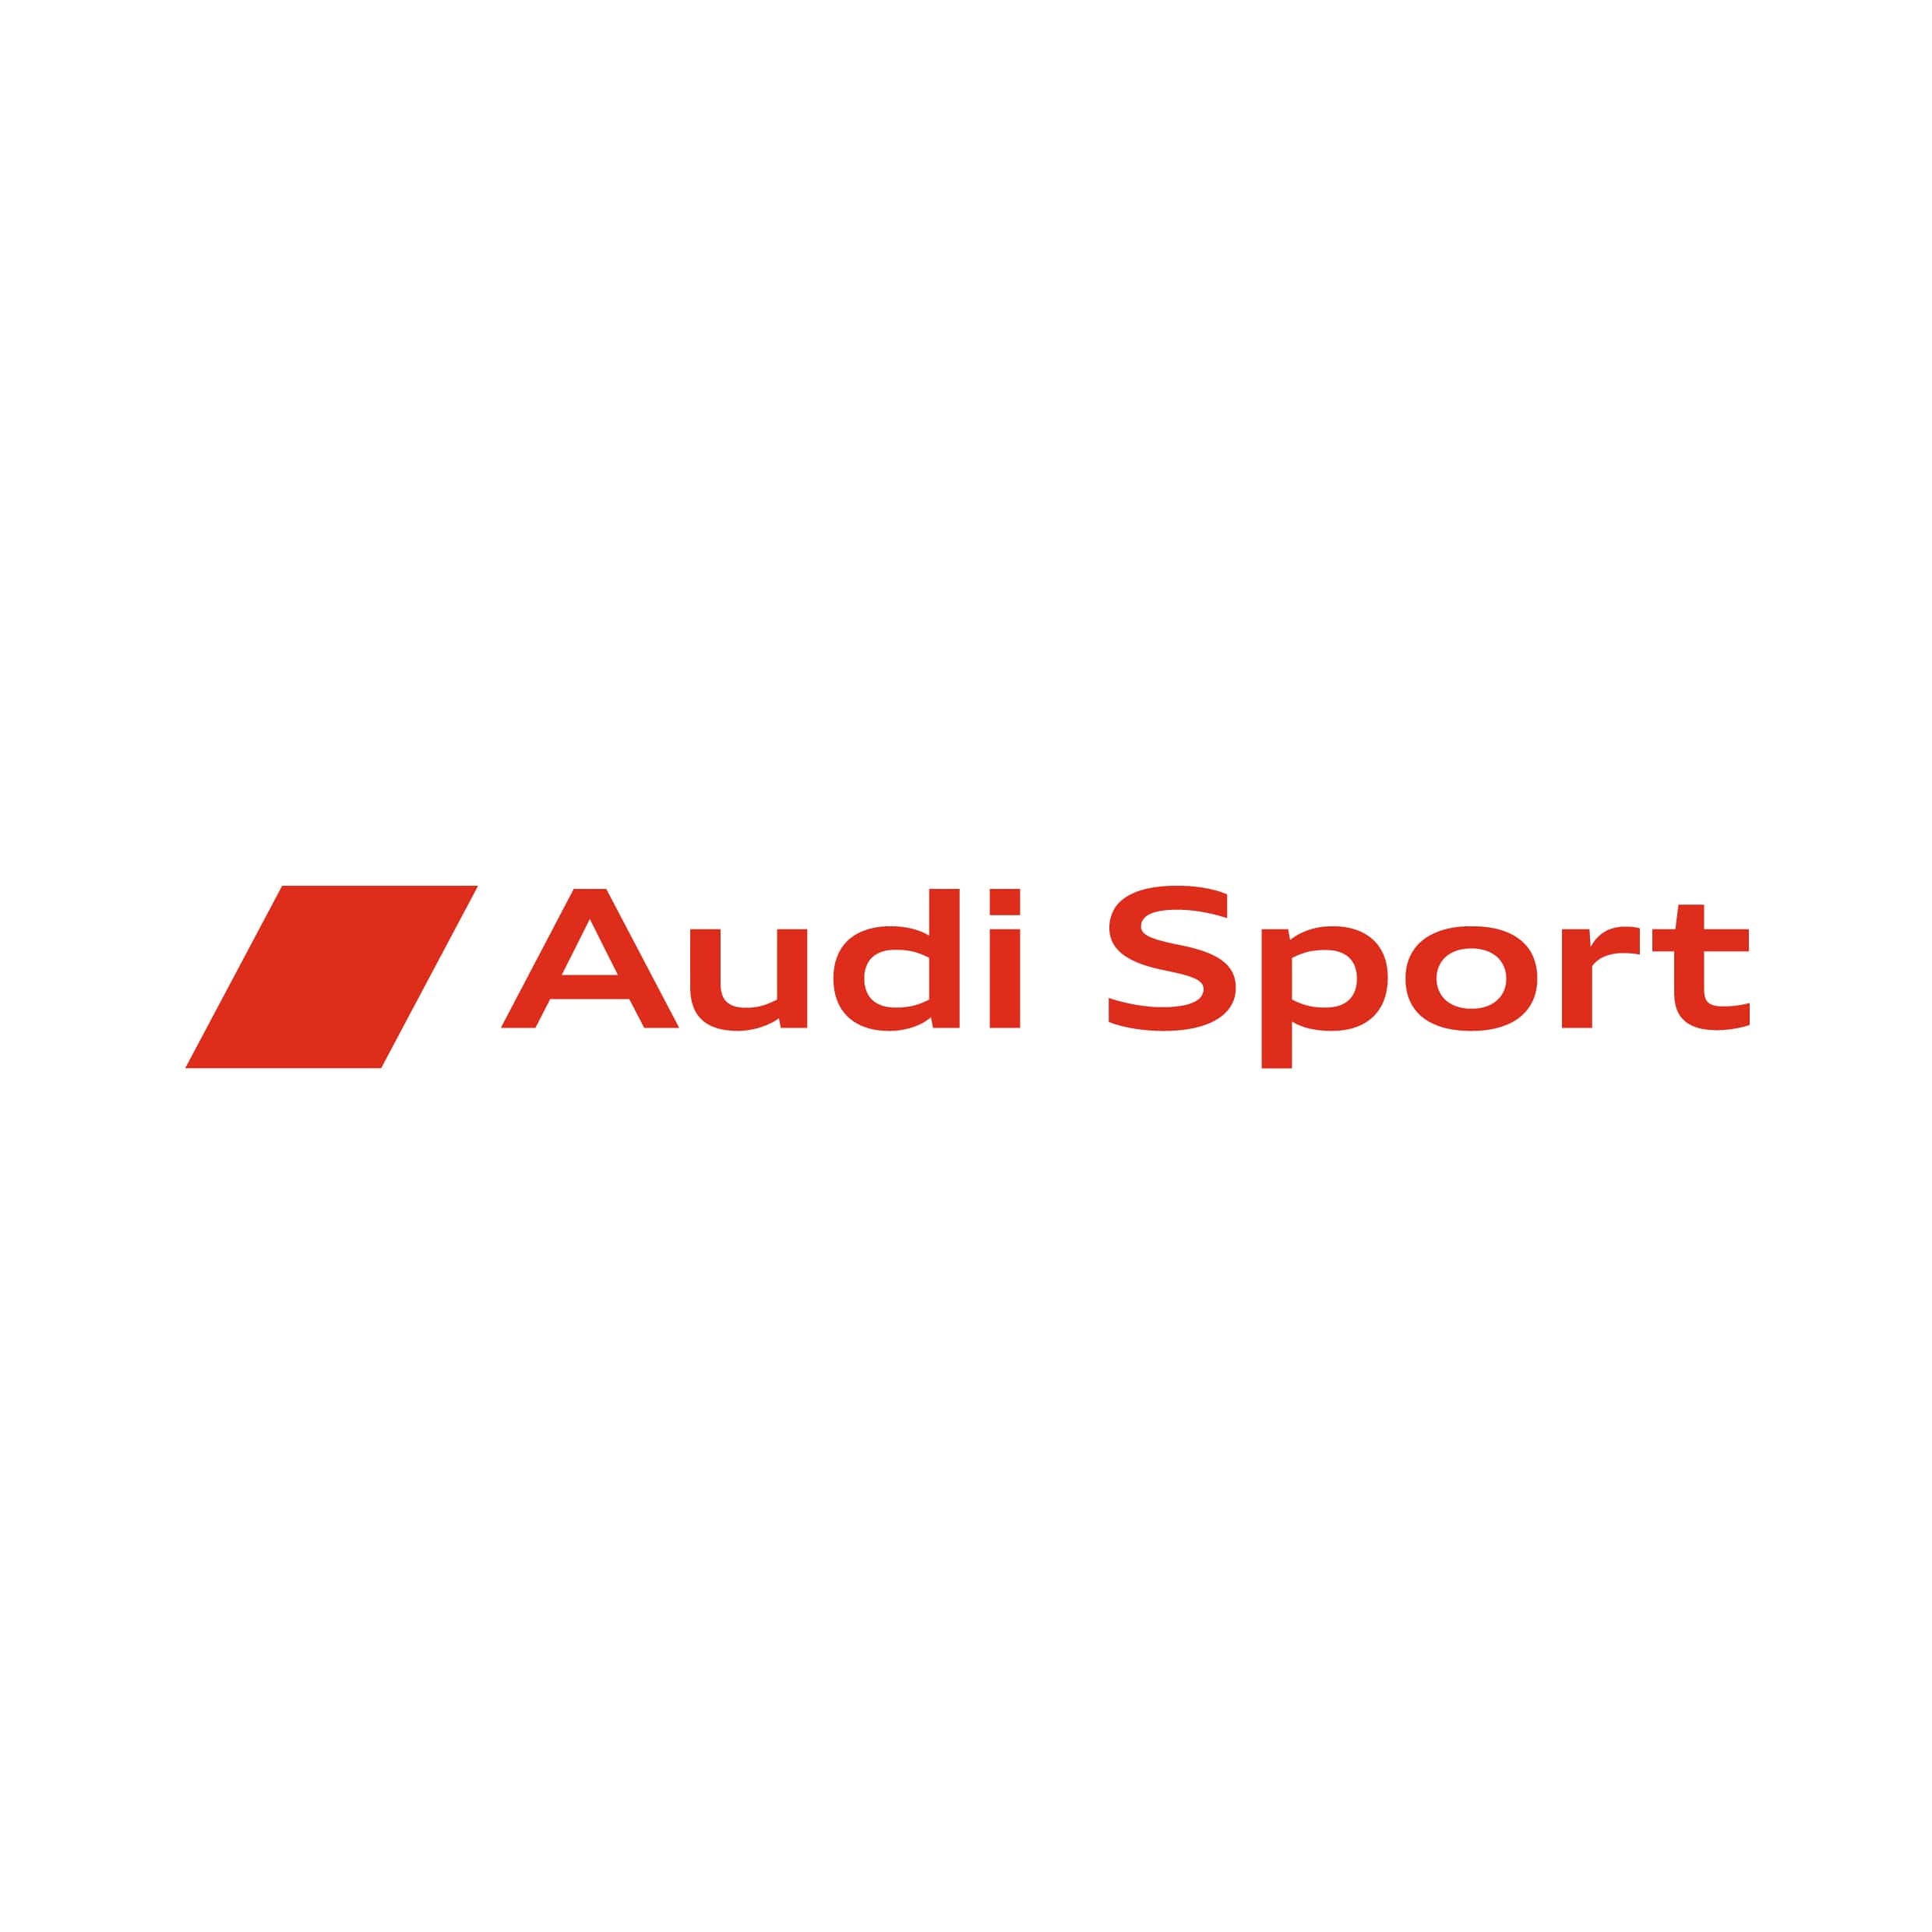 stickers-audi-sport-ref33-autocollant-voiture-sticker-auto-autocollants-decals-sponsors-racing-tuning-sport-logo-min